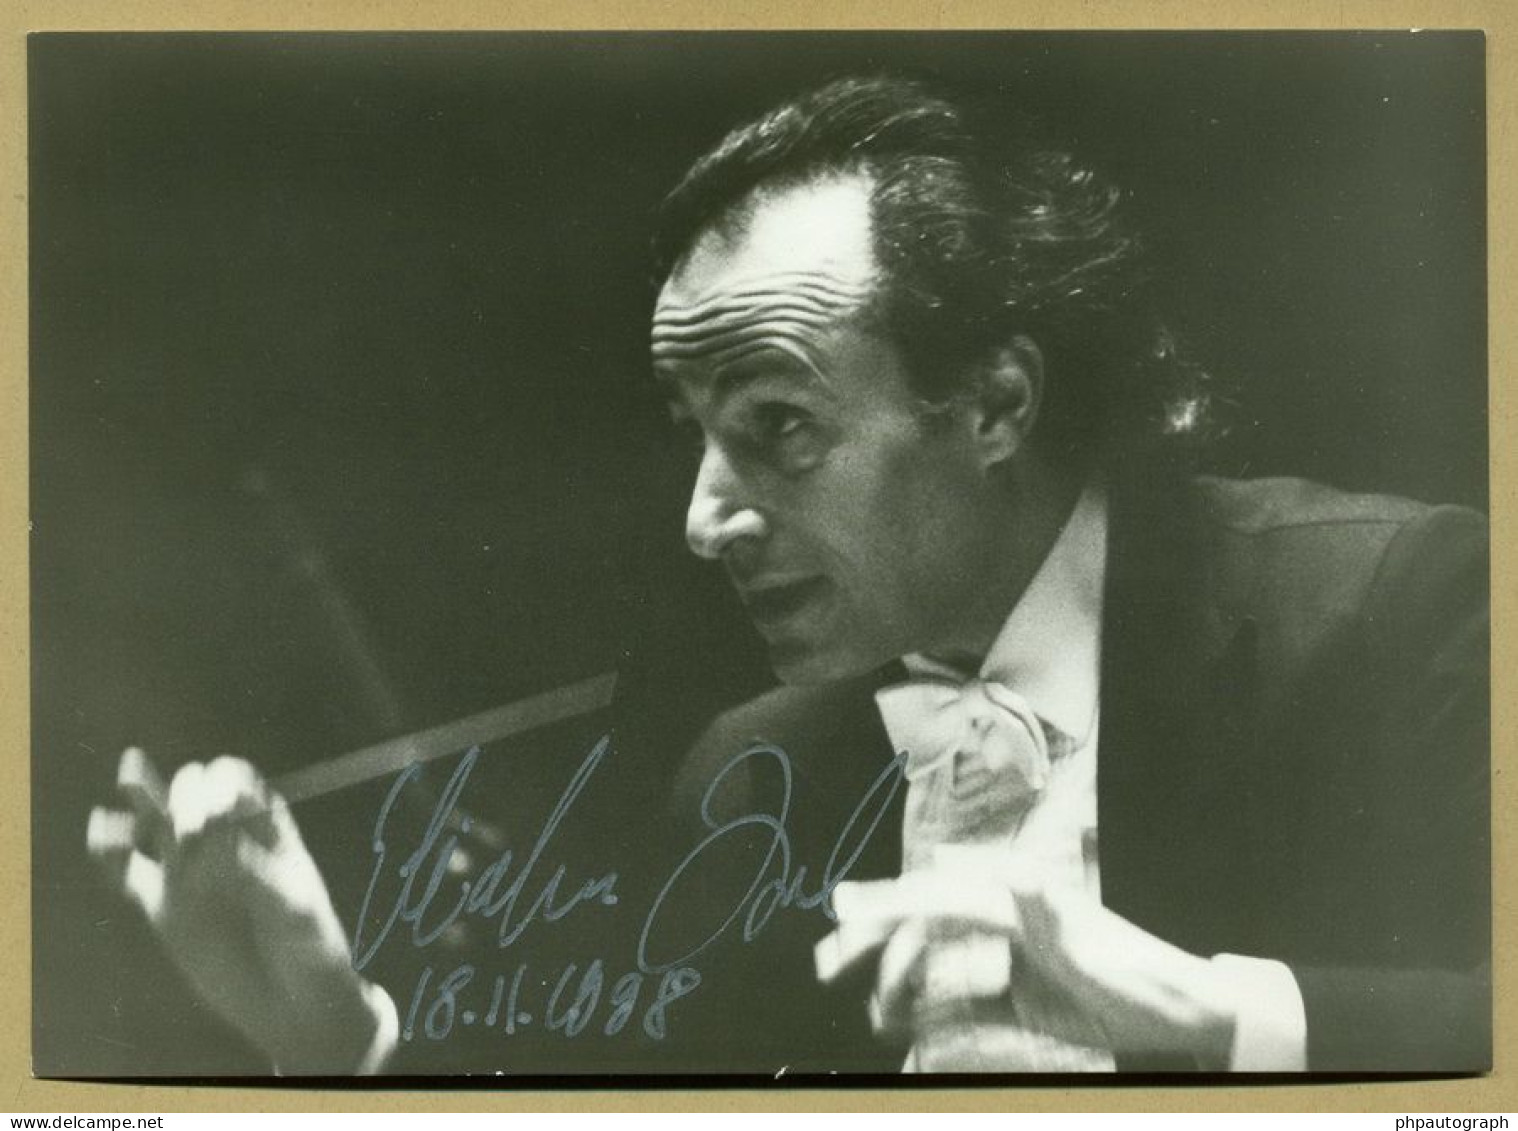 Eliahu Inbal - Israeli Conductor - Signed Nice Photo - 1998 - COA - Singers & Musicians